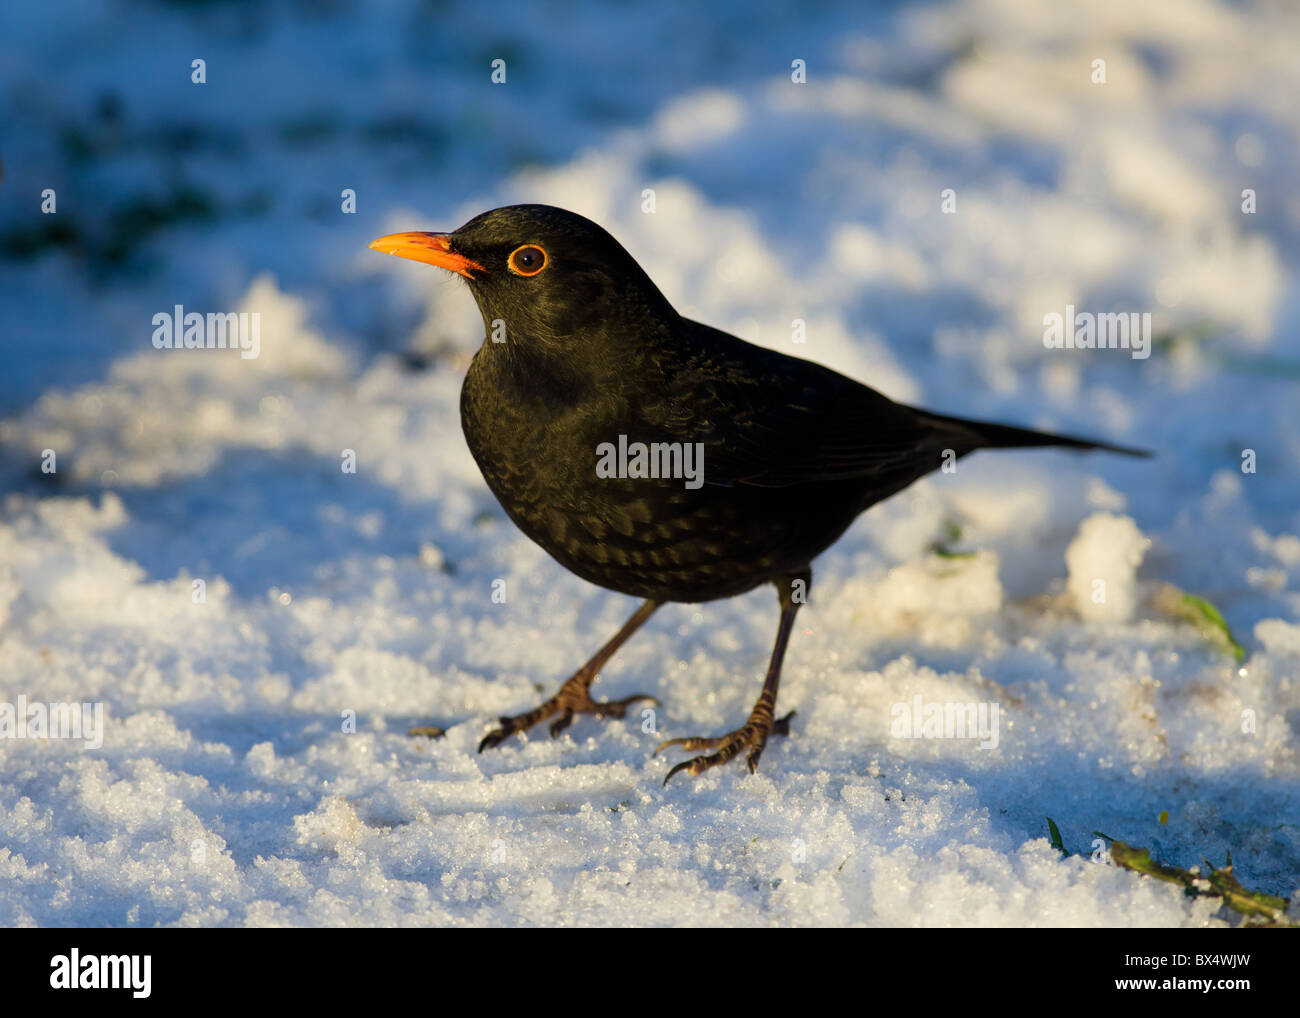 Blackbird in the Snow Stock Photo